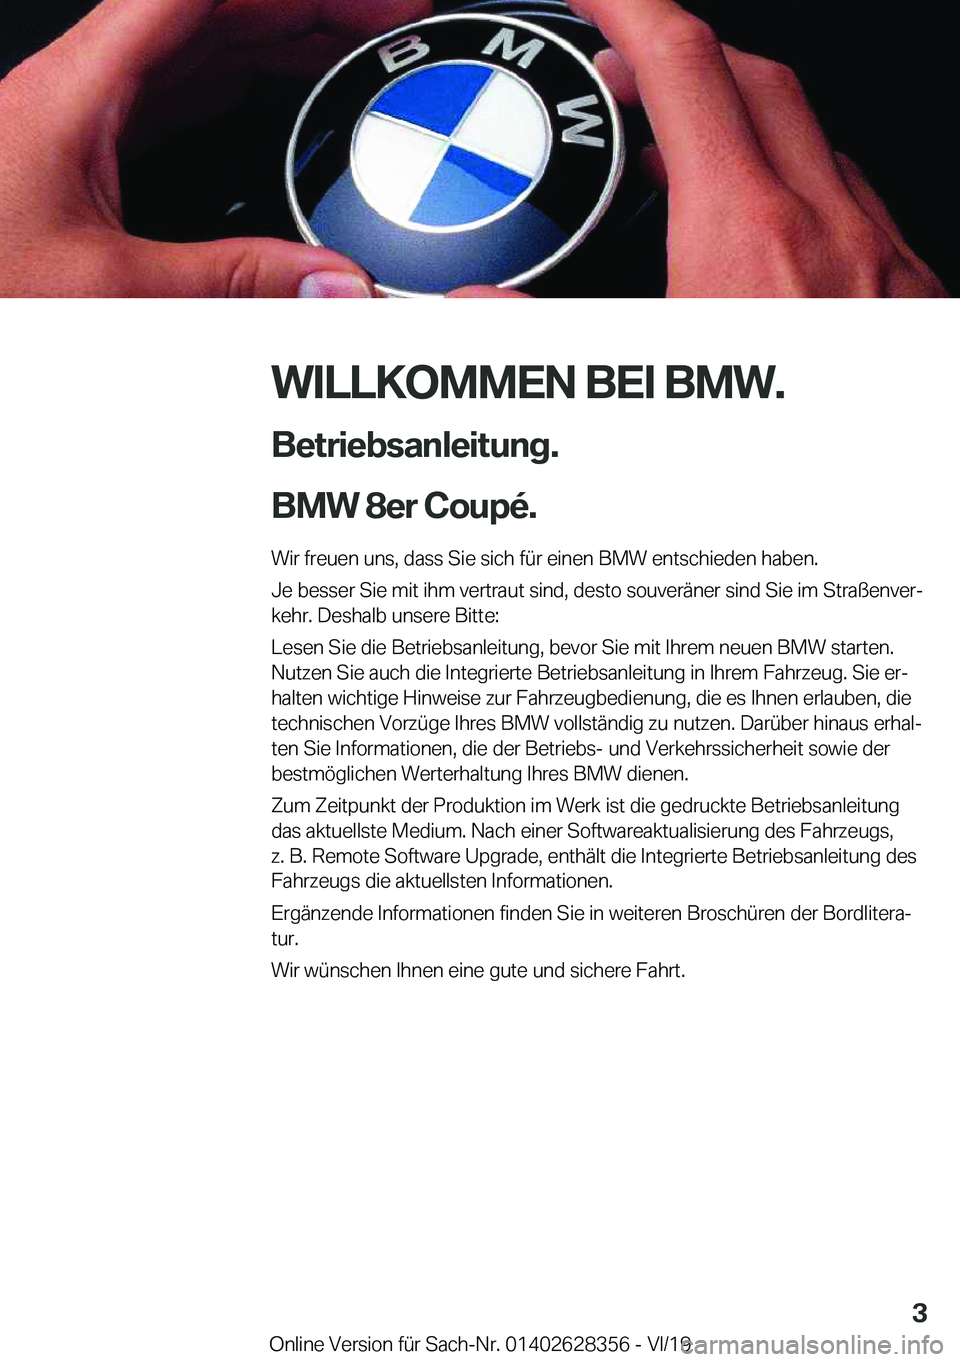 BMW 8 SERIES COUPE 2020  Betriebsanleitungen (in German) �W�I�L�L�K�O�M�M�E�N��B�E�I��B�M�W�.�B�e�t�r�i�e�b�s�a�n�l�e�i�t�u�n�g�.
�B�M�W��8�e�r��C�o�u�p�